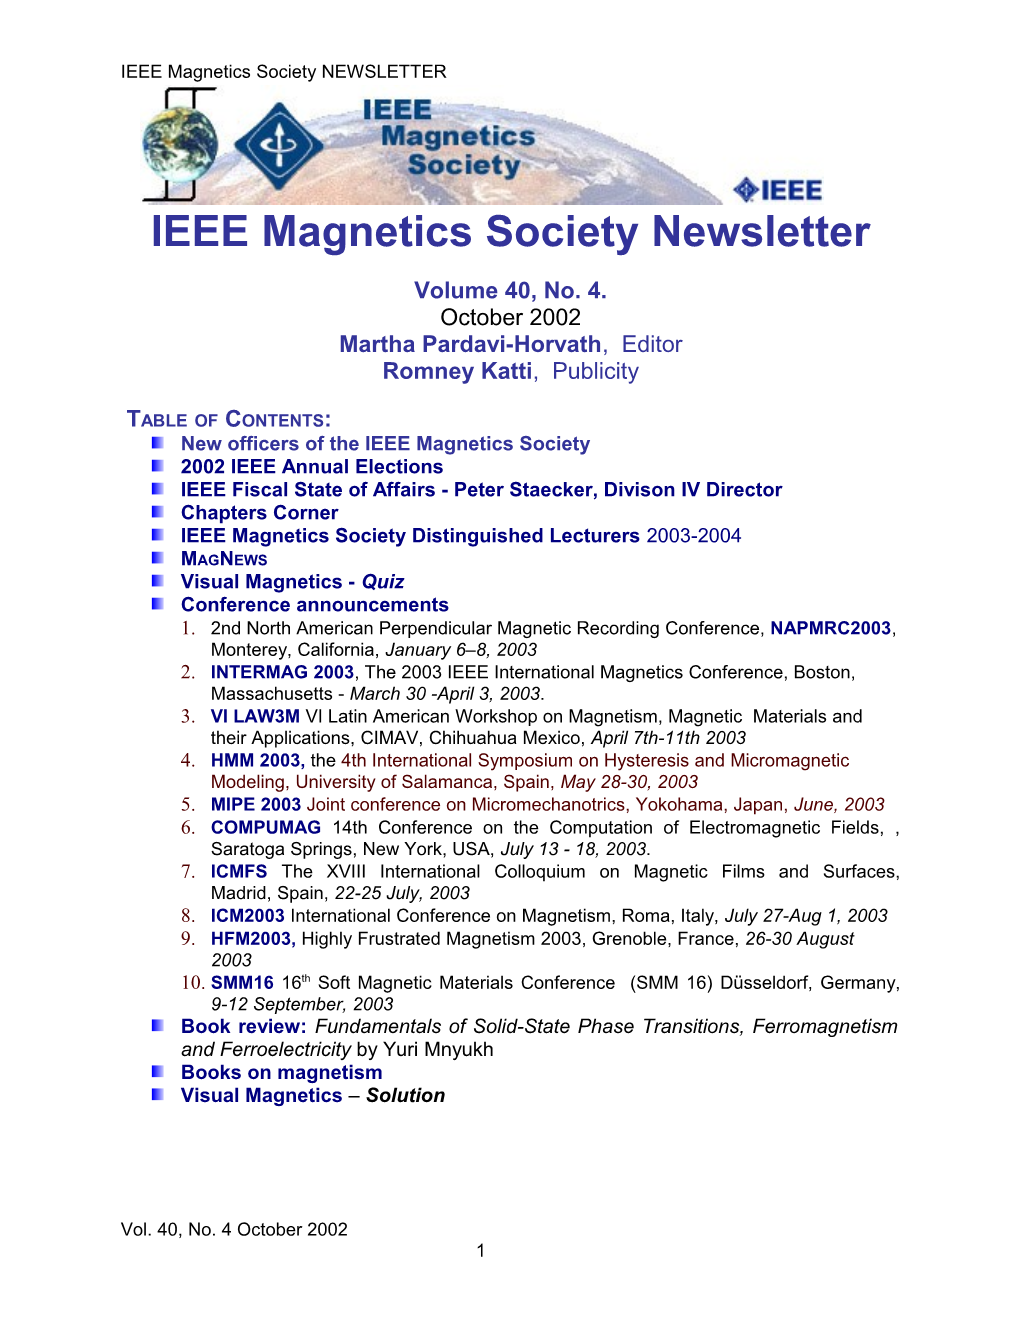 IEEE Magnetics Society Newsletter